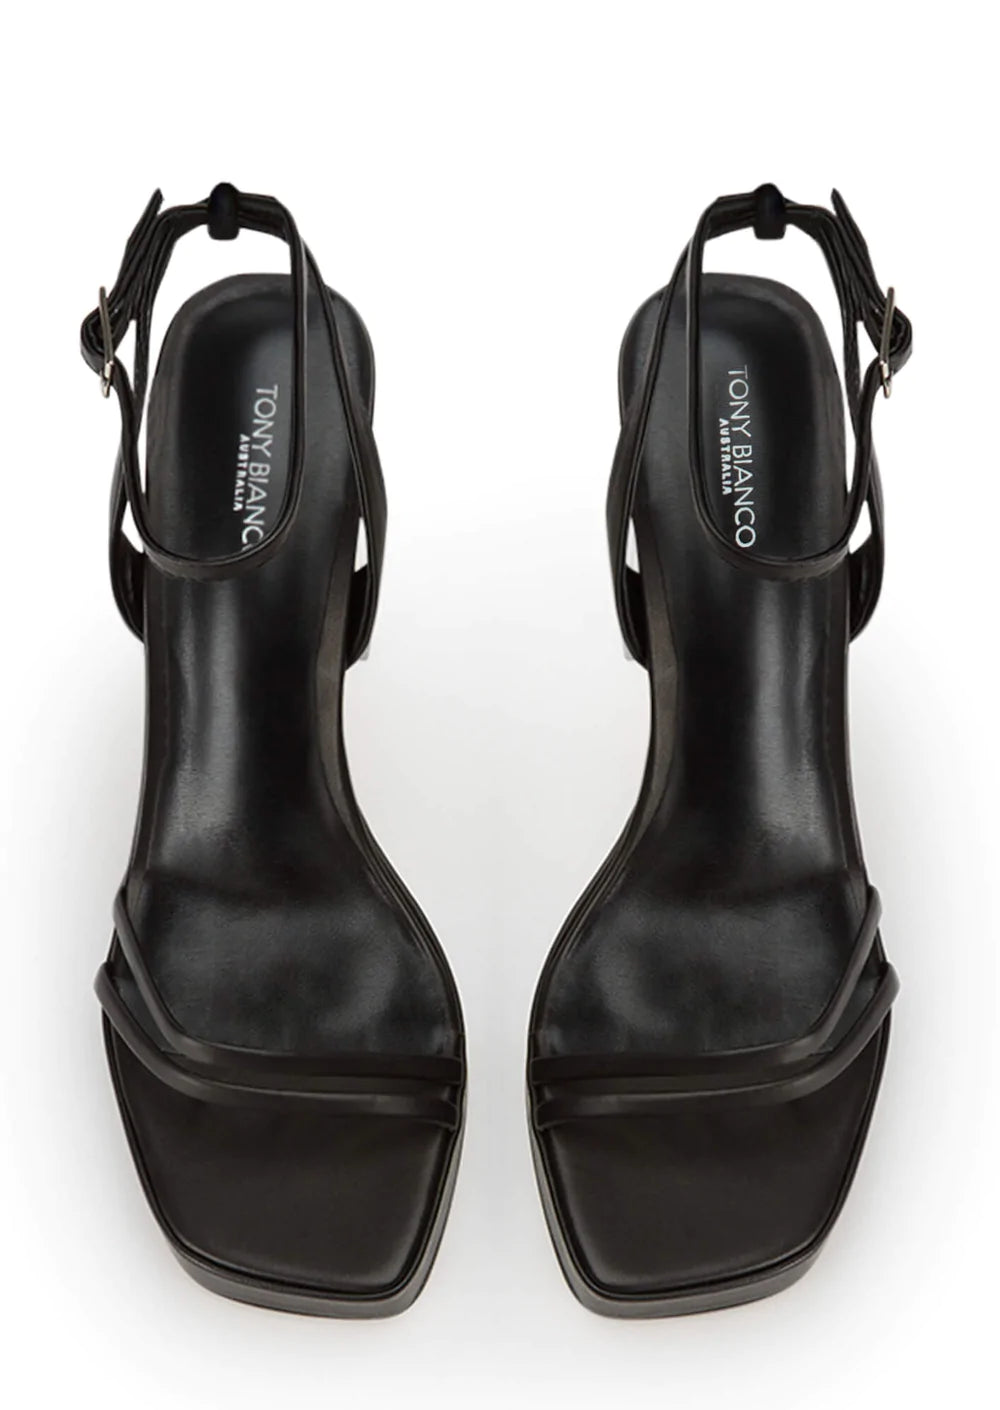 DANDY PLATFORM HEEL - TONY BIANCO - 10, 36, 6.5, 7, 7.5, 8, 9, BLACK, TAN, womens footwear - Stomp Shoes Darwin